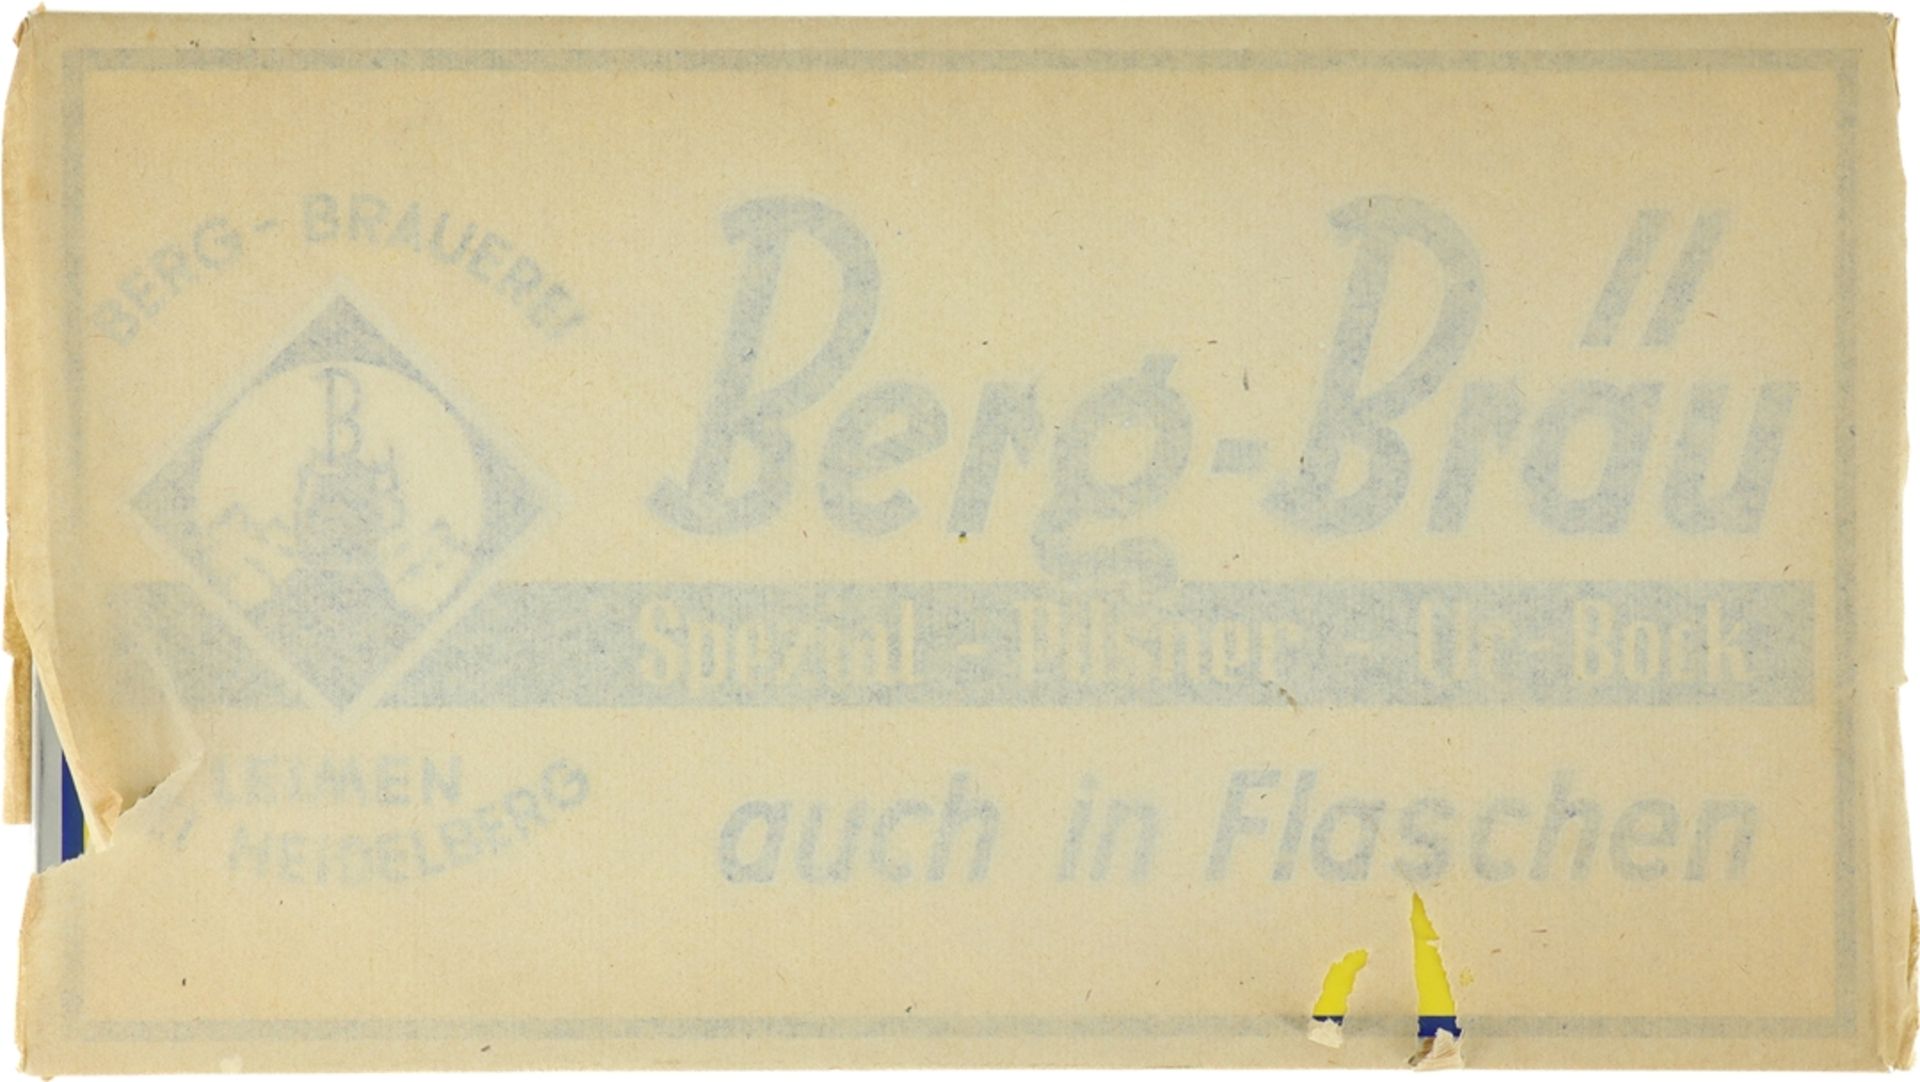 Enameloid sign Bergbräu, Leimen near Heidelberg, around 1960